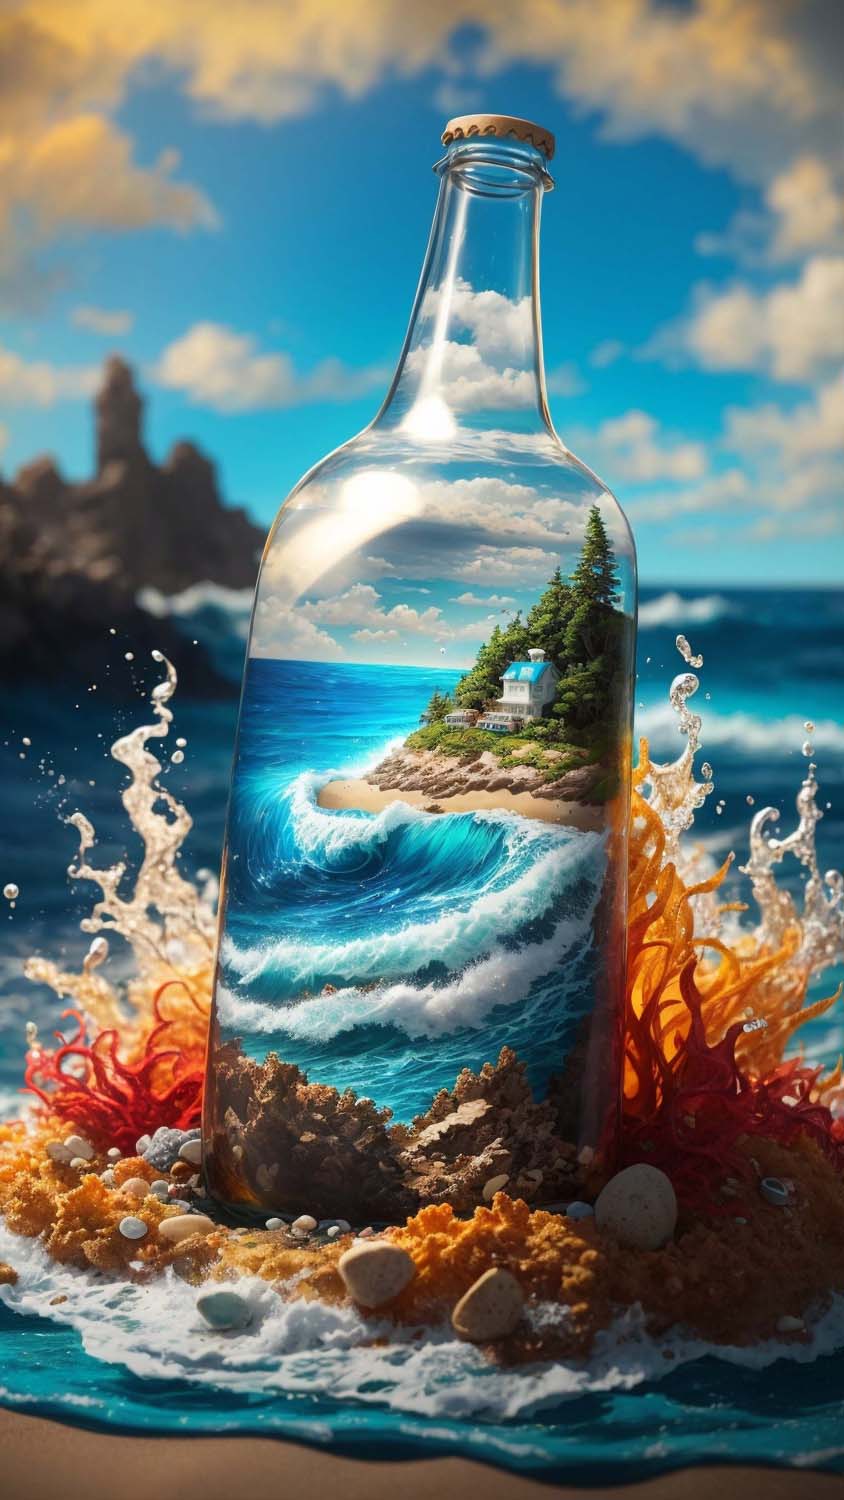 Island in Jar iPhone Wallpaper 4K